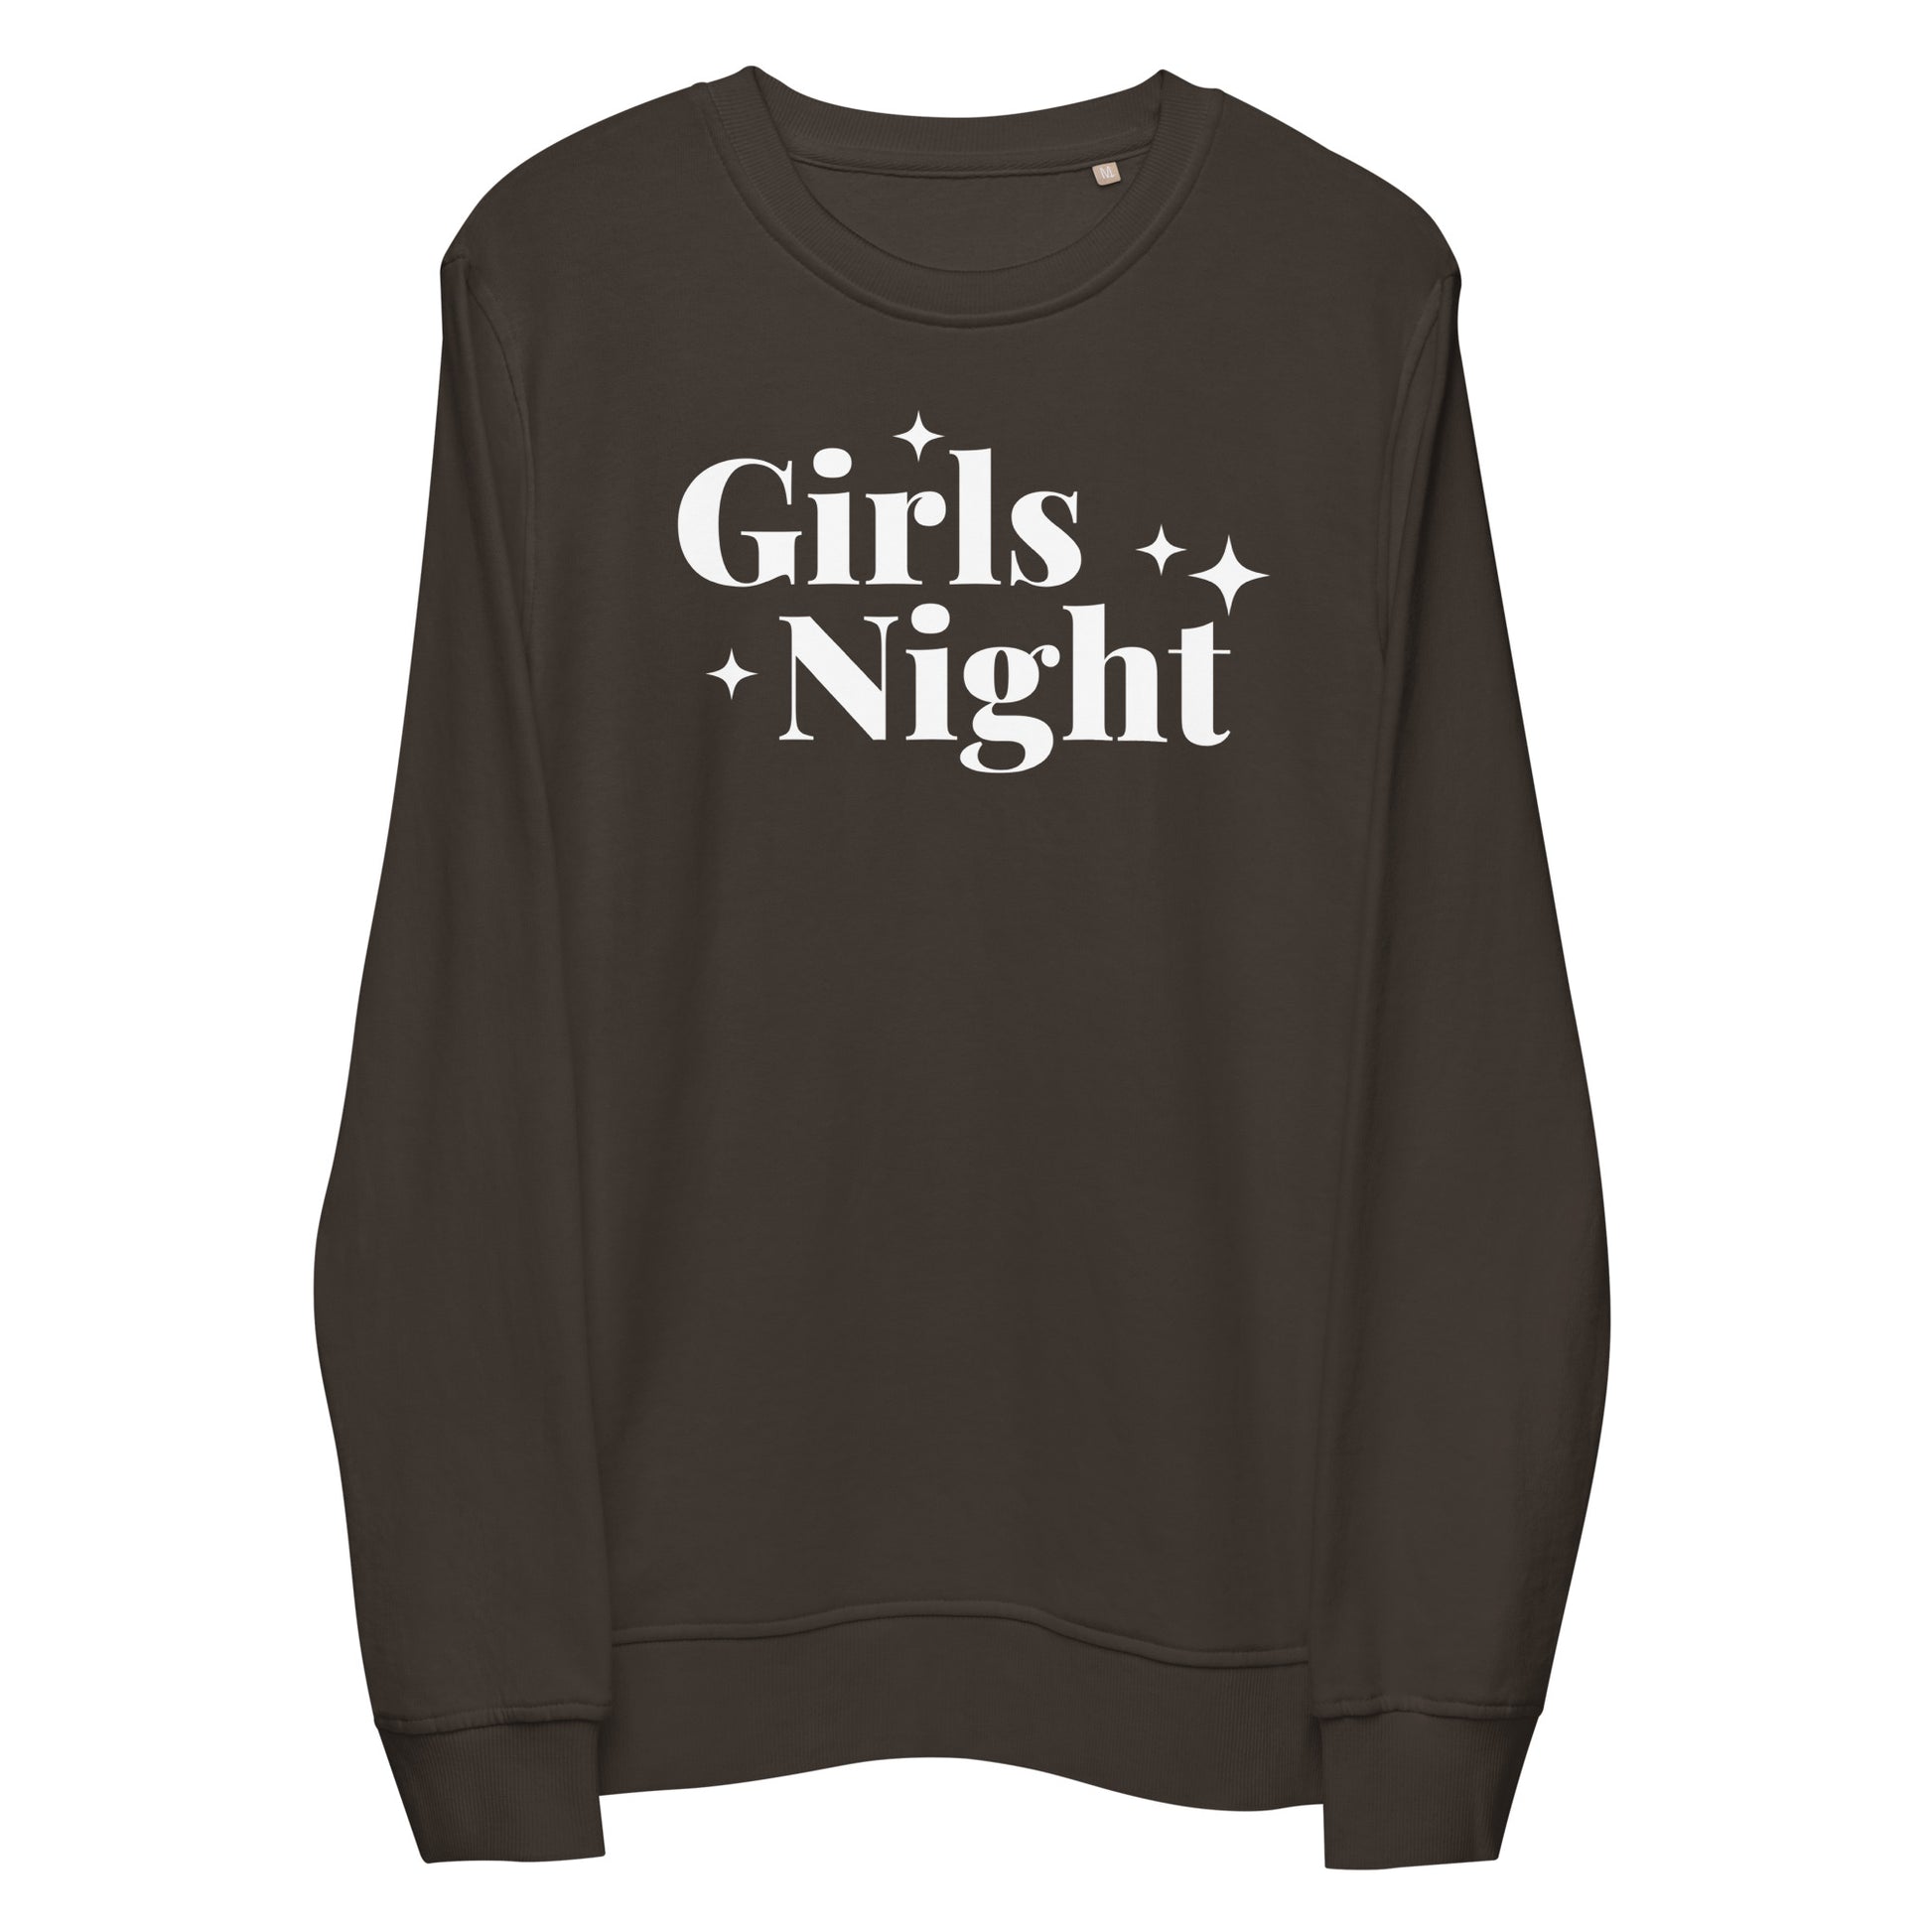 Summer Girls Night Sweatshirt in color brown